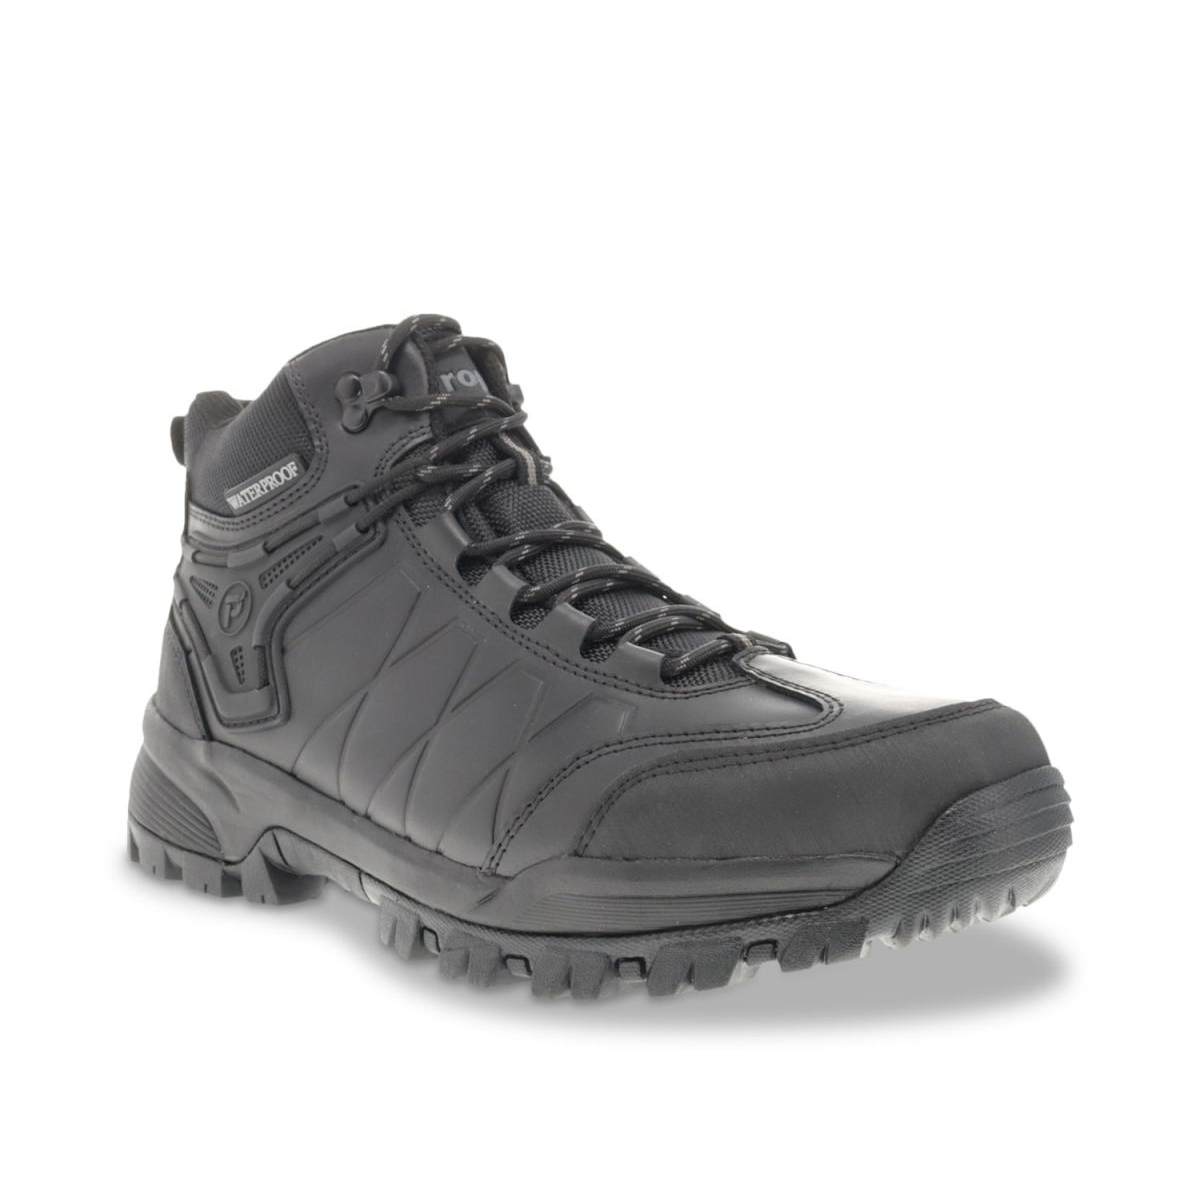 Propet Men's Ridge Walker Force Hiking Boots Black - MBA052LBLK BLACK - BLACK, 8